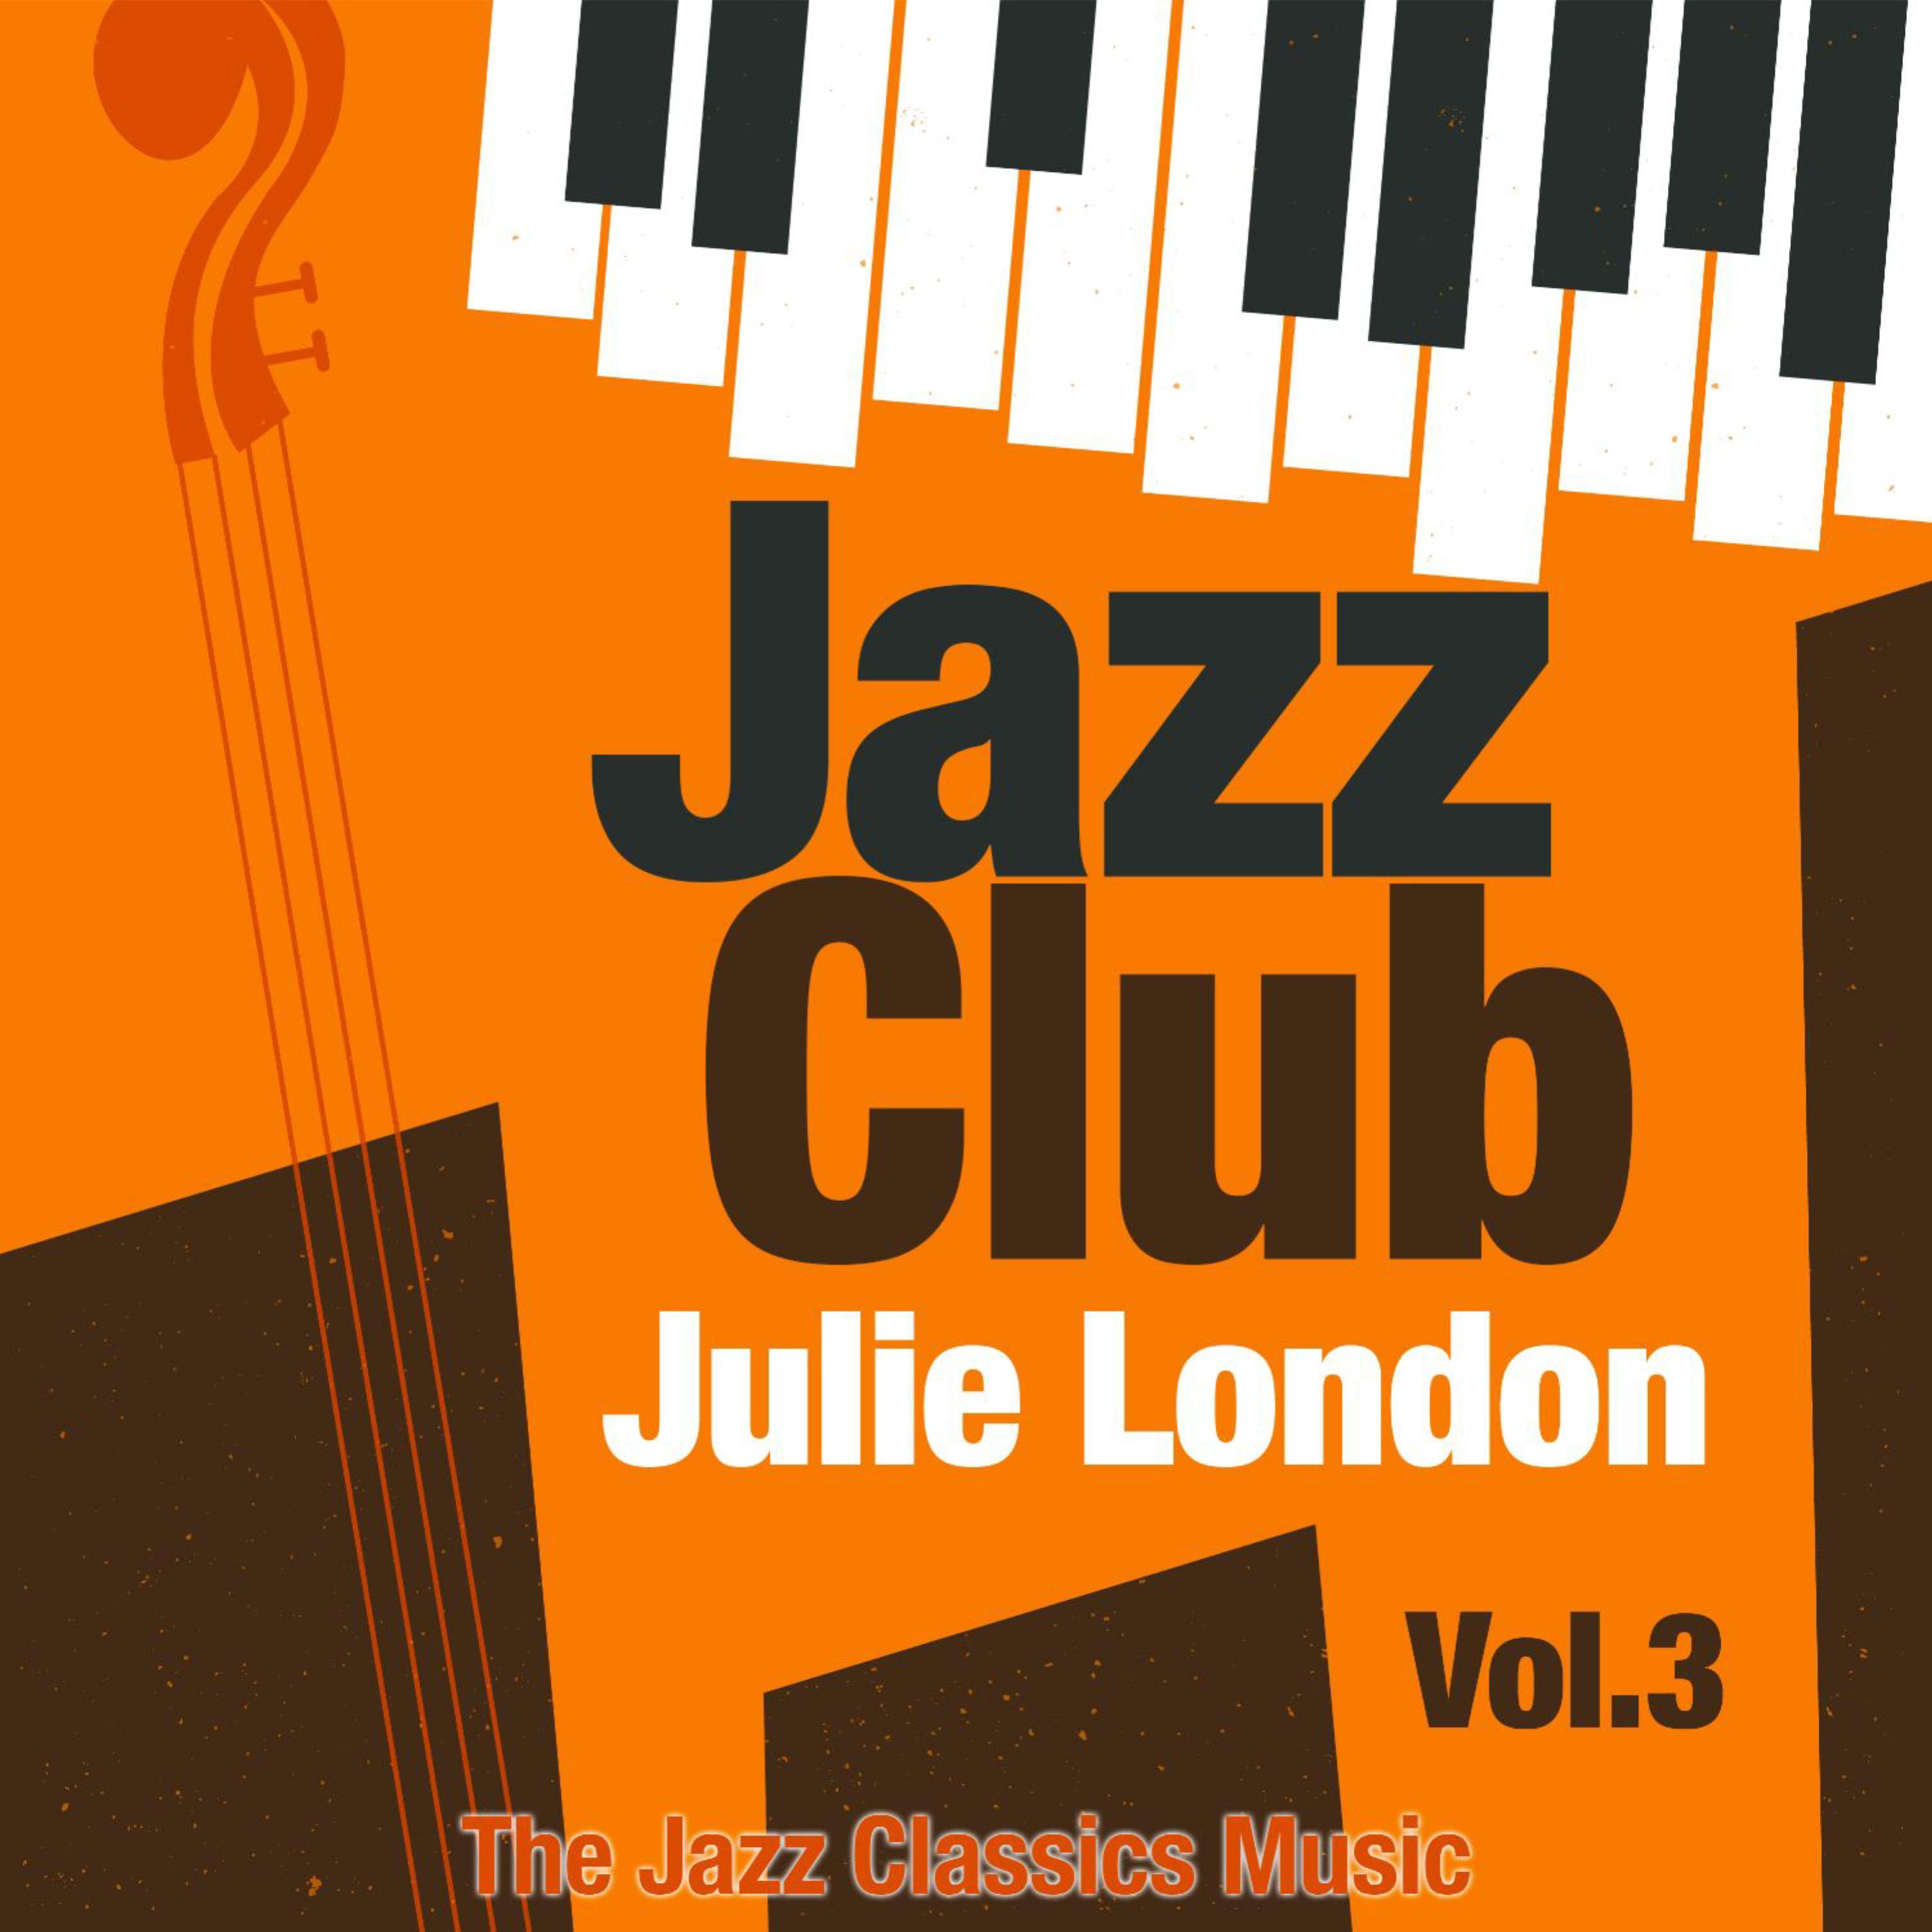 Jazz Club, Vol. 3专辑